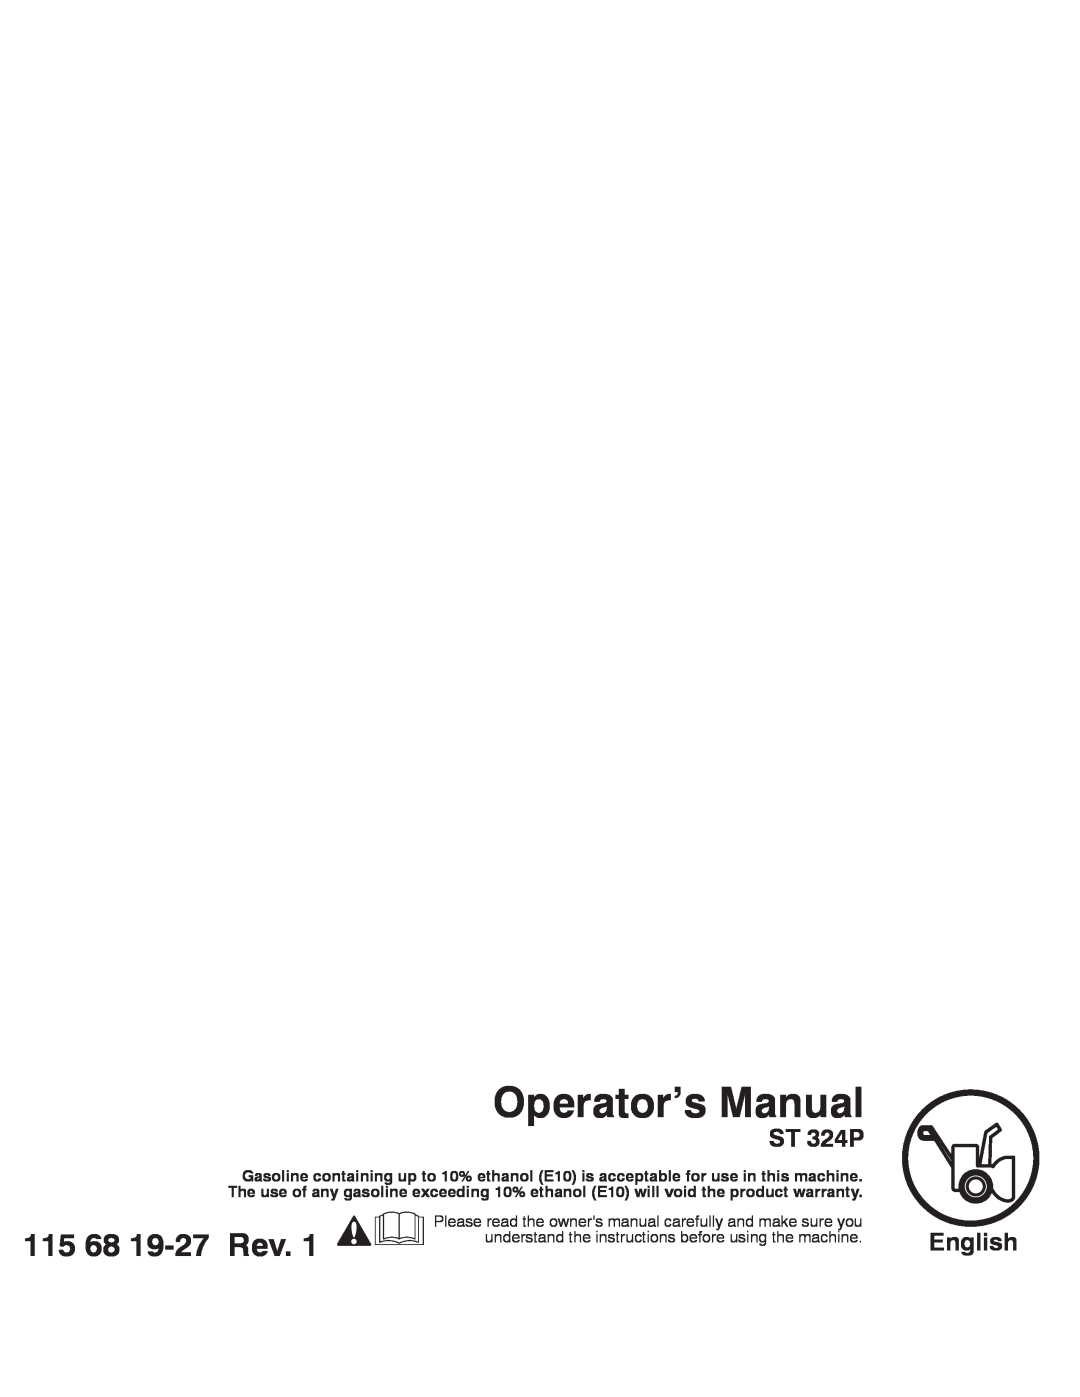 Husqvarna ST 324P warranty Operator’s Manual, 115 68 19-27 Rev, English 